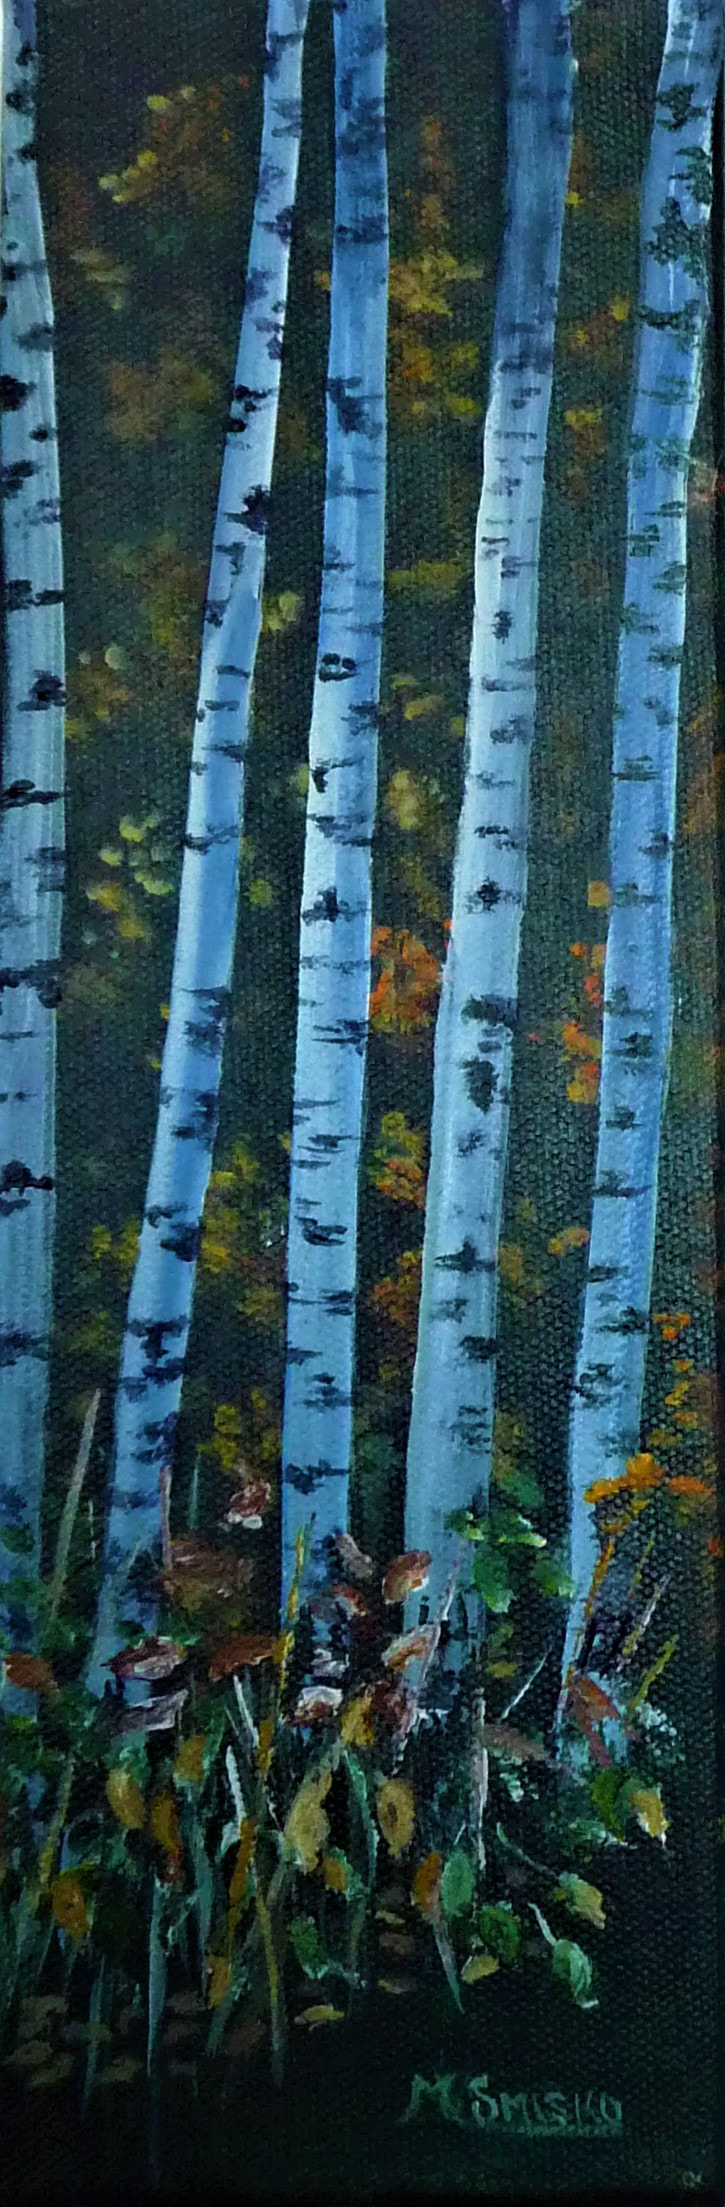 Acrylic on canvas, 12"x4" unframed, INTO THE FOREST #1, $80, by msmiskocreations.com
msmisko@yahoo.ca